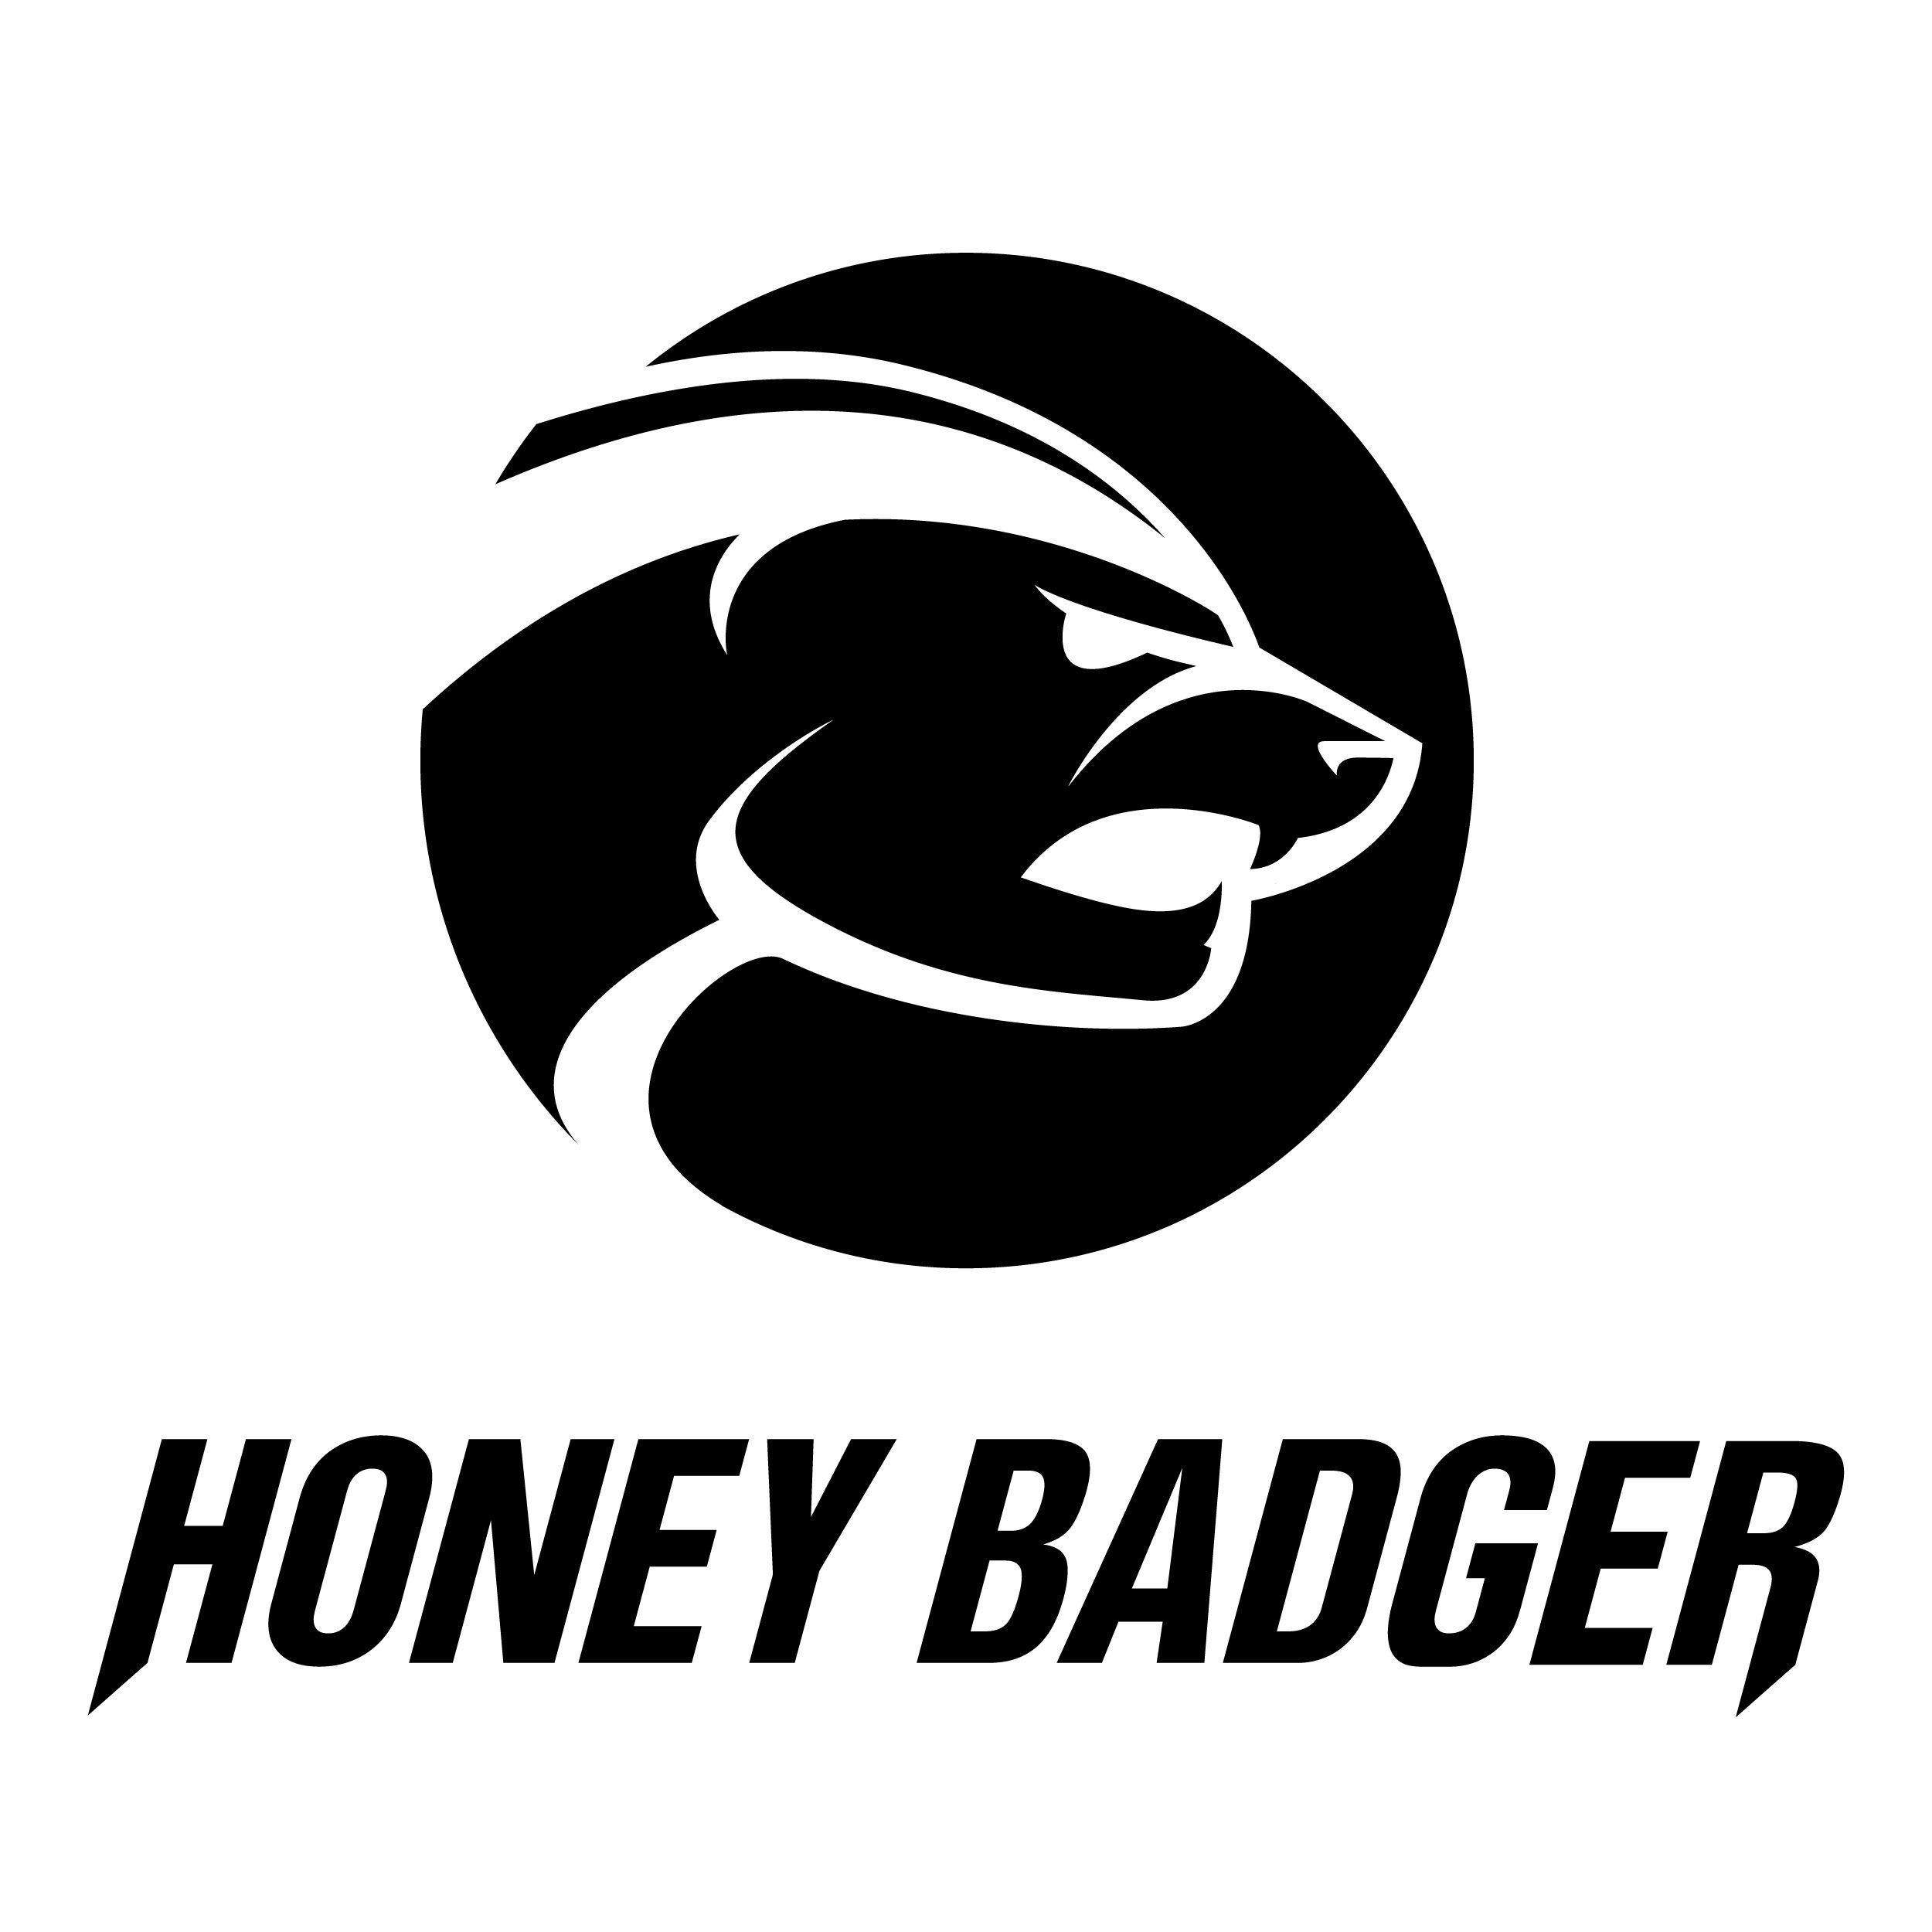 Badger Logo - Current Sponsors | LOGO | Pinterest | Honey badger, Logos and Badger